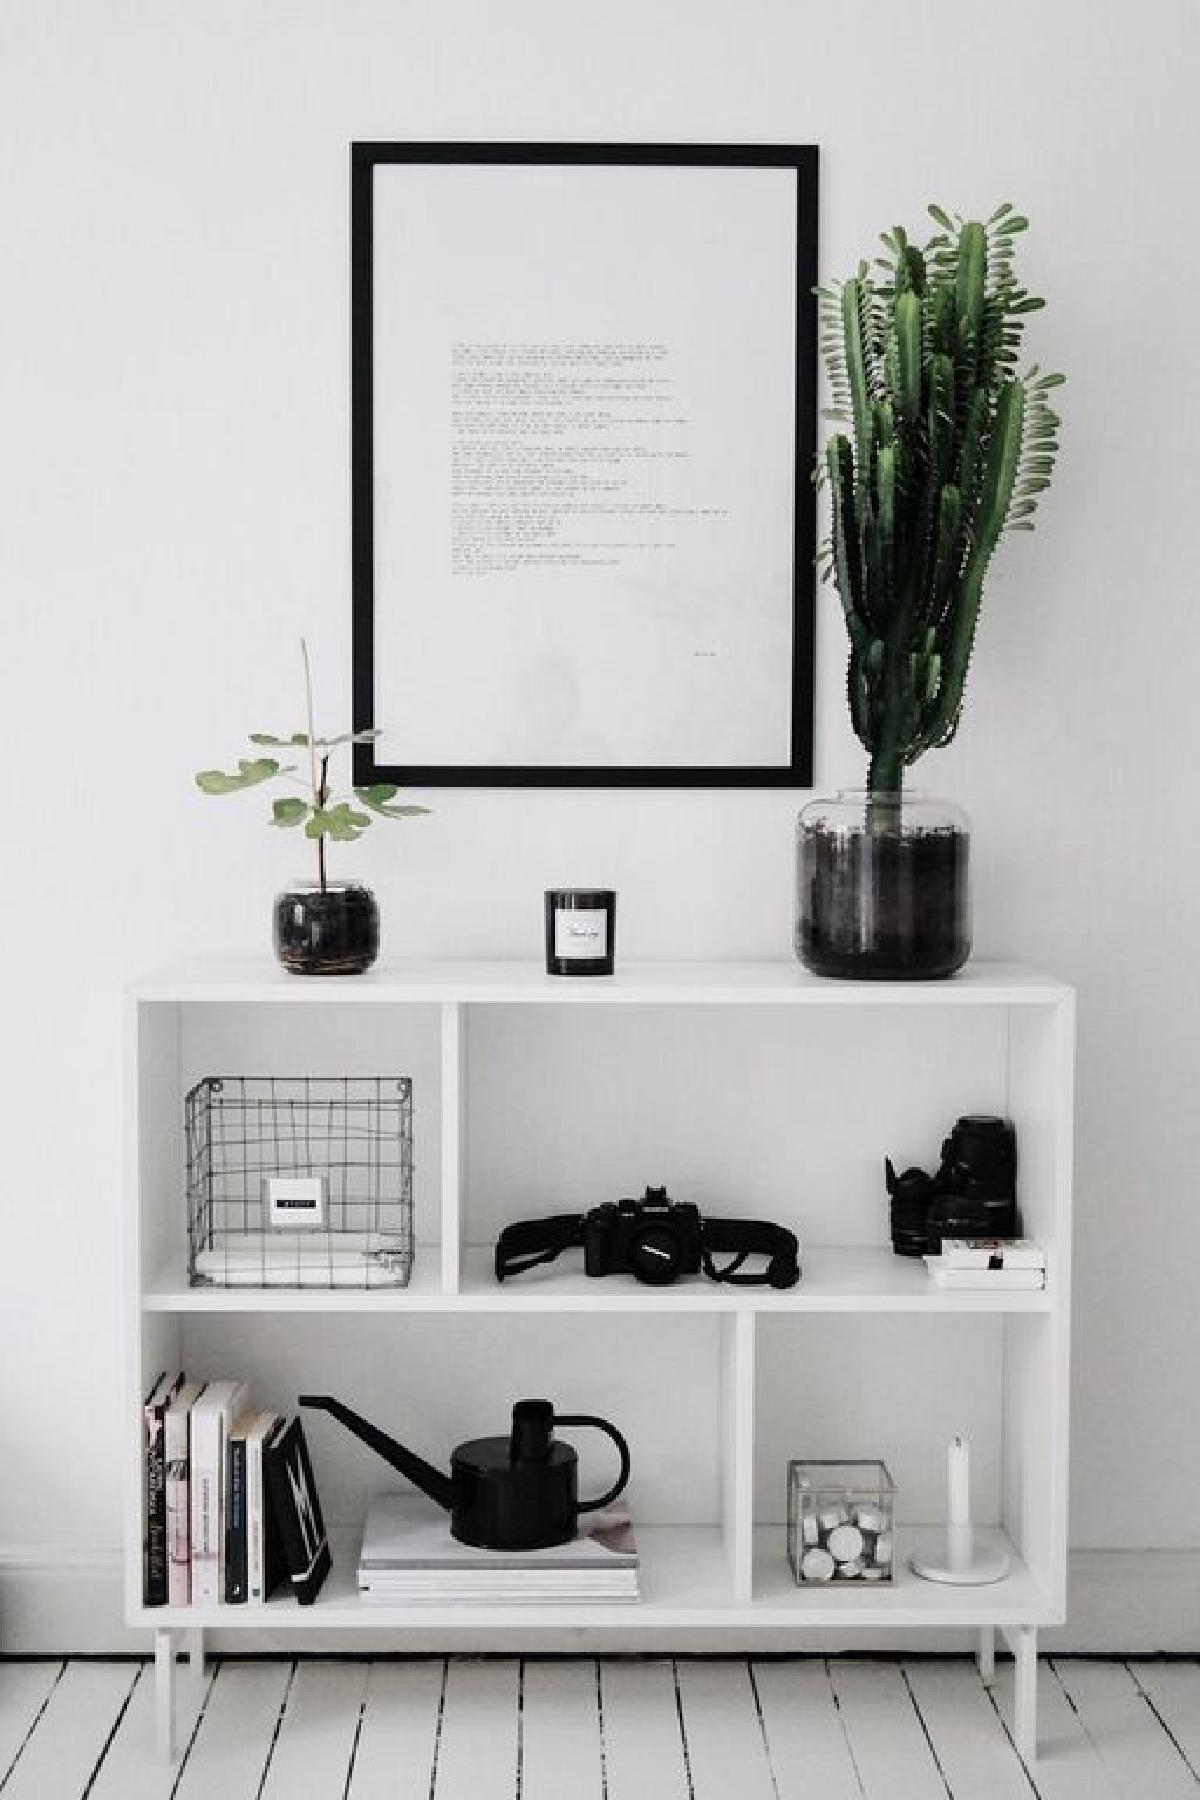 http://dlingoo.com/46-perfect-minimalist-bedroom-ideas-black-white-colors/